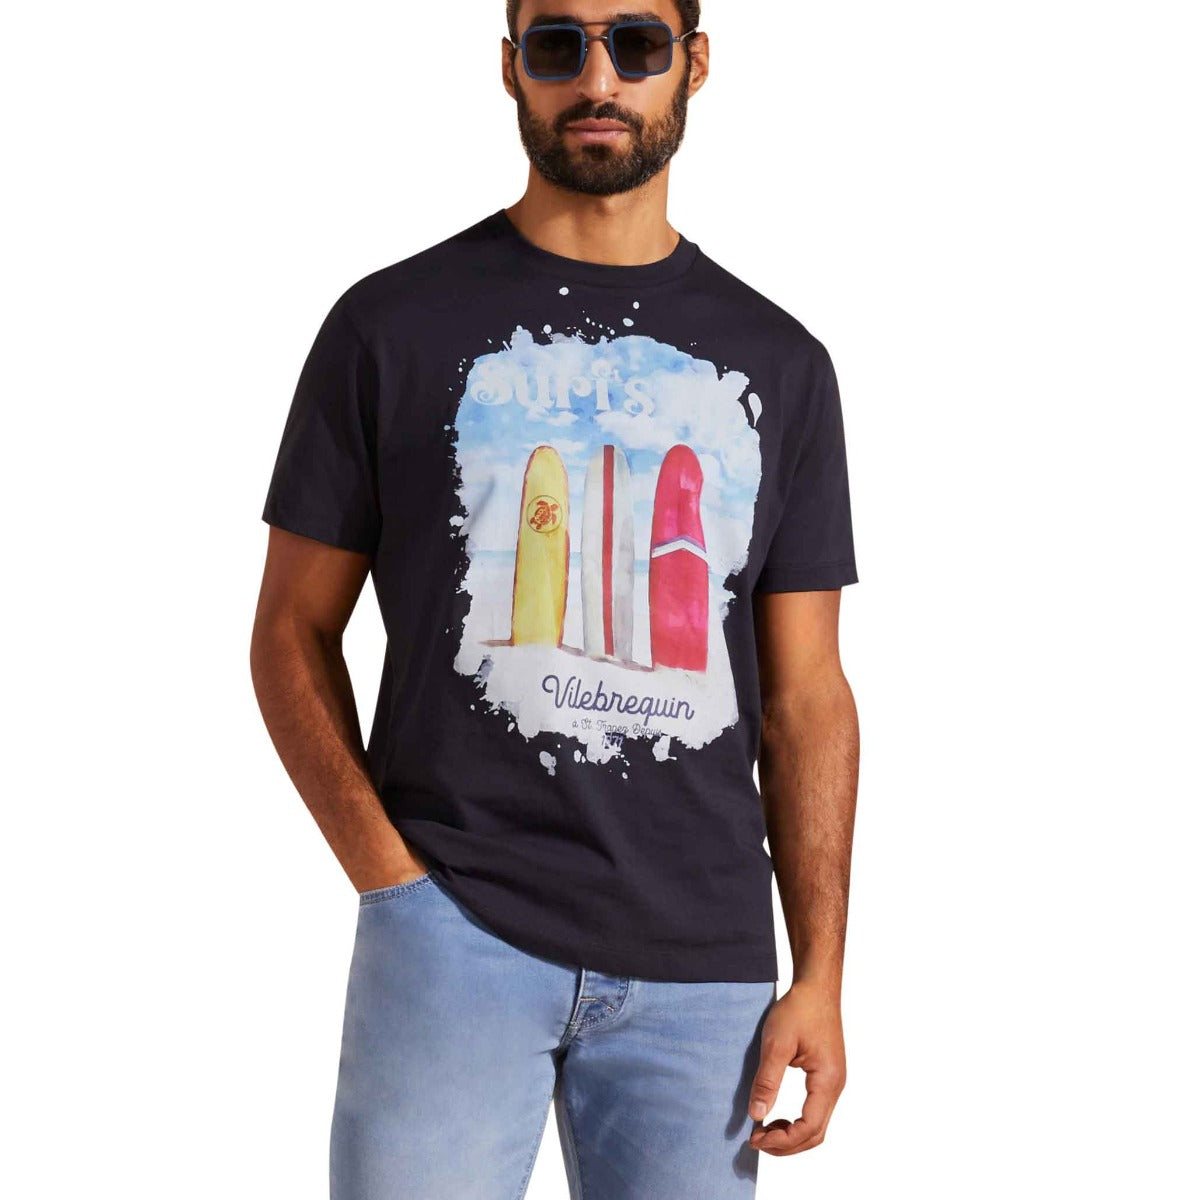 Navy ‘Surf’s Up’ Graphic T-shirt Short Sleeve Vilebrequin   